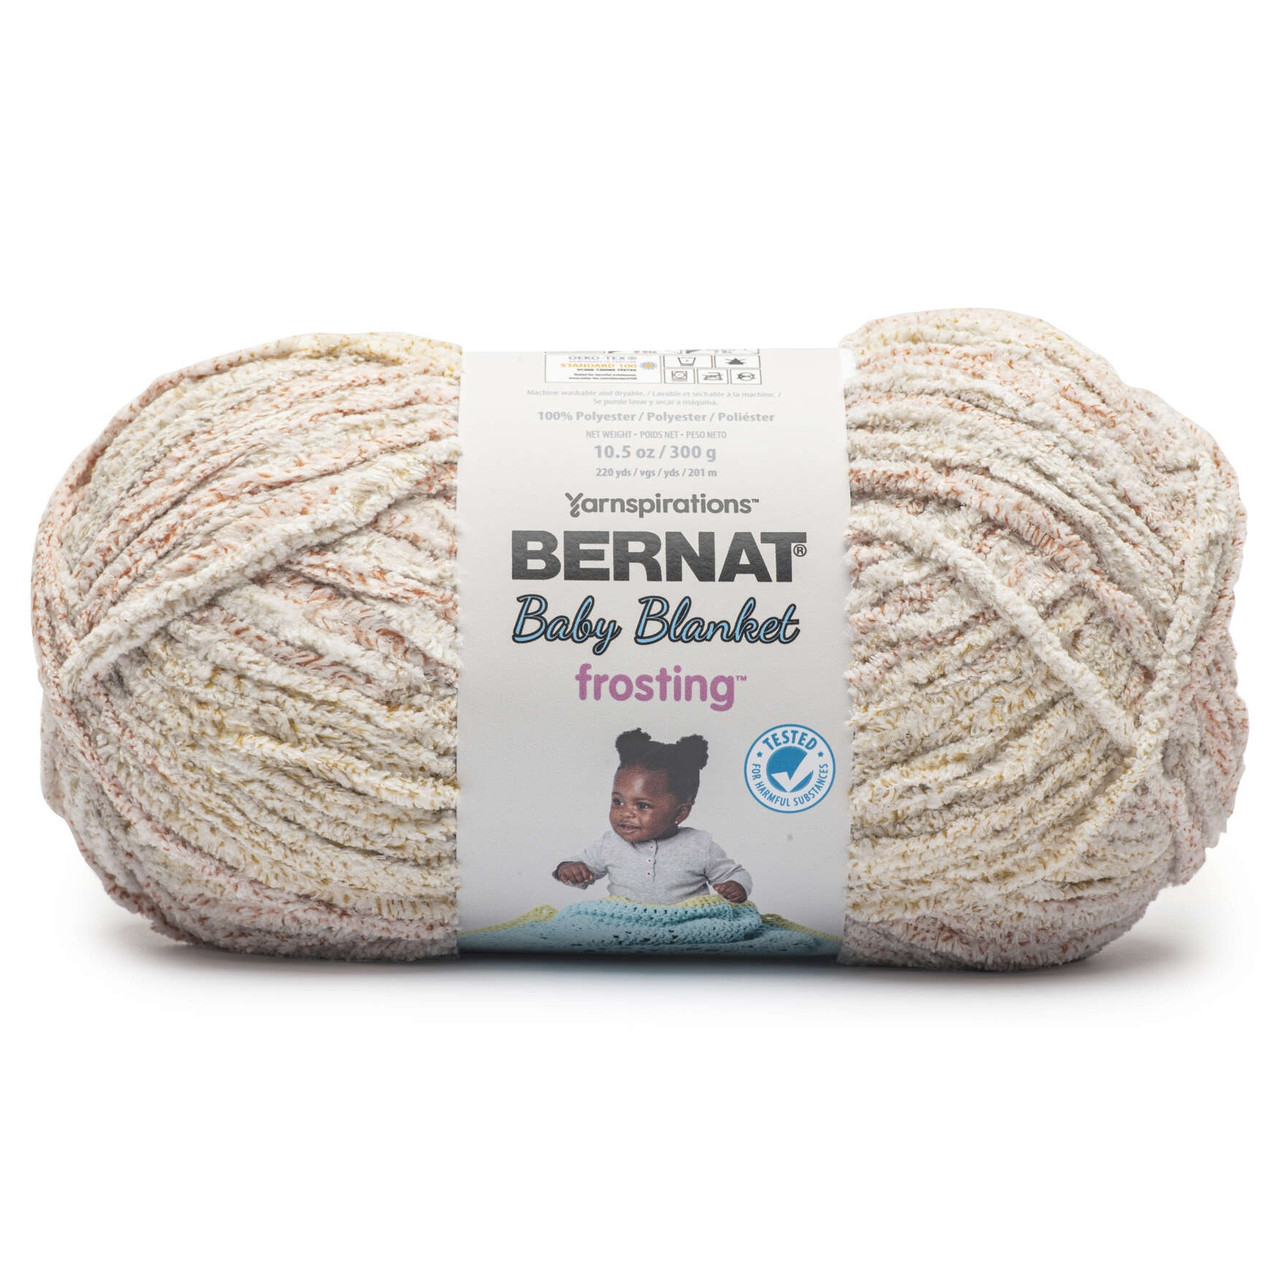 Bernat Baby Blanket Frosting Yarn-Golden Hour 161161-61002 - GettyCrafts